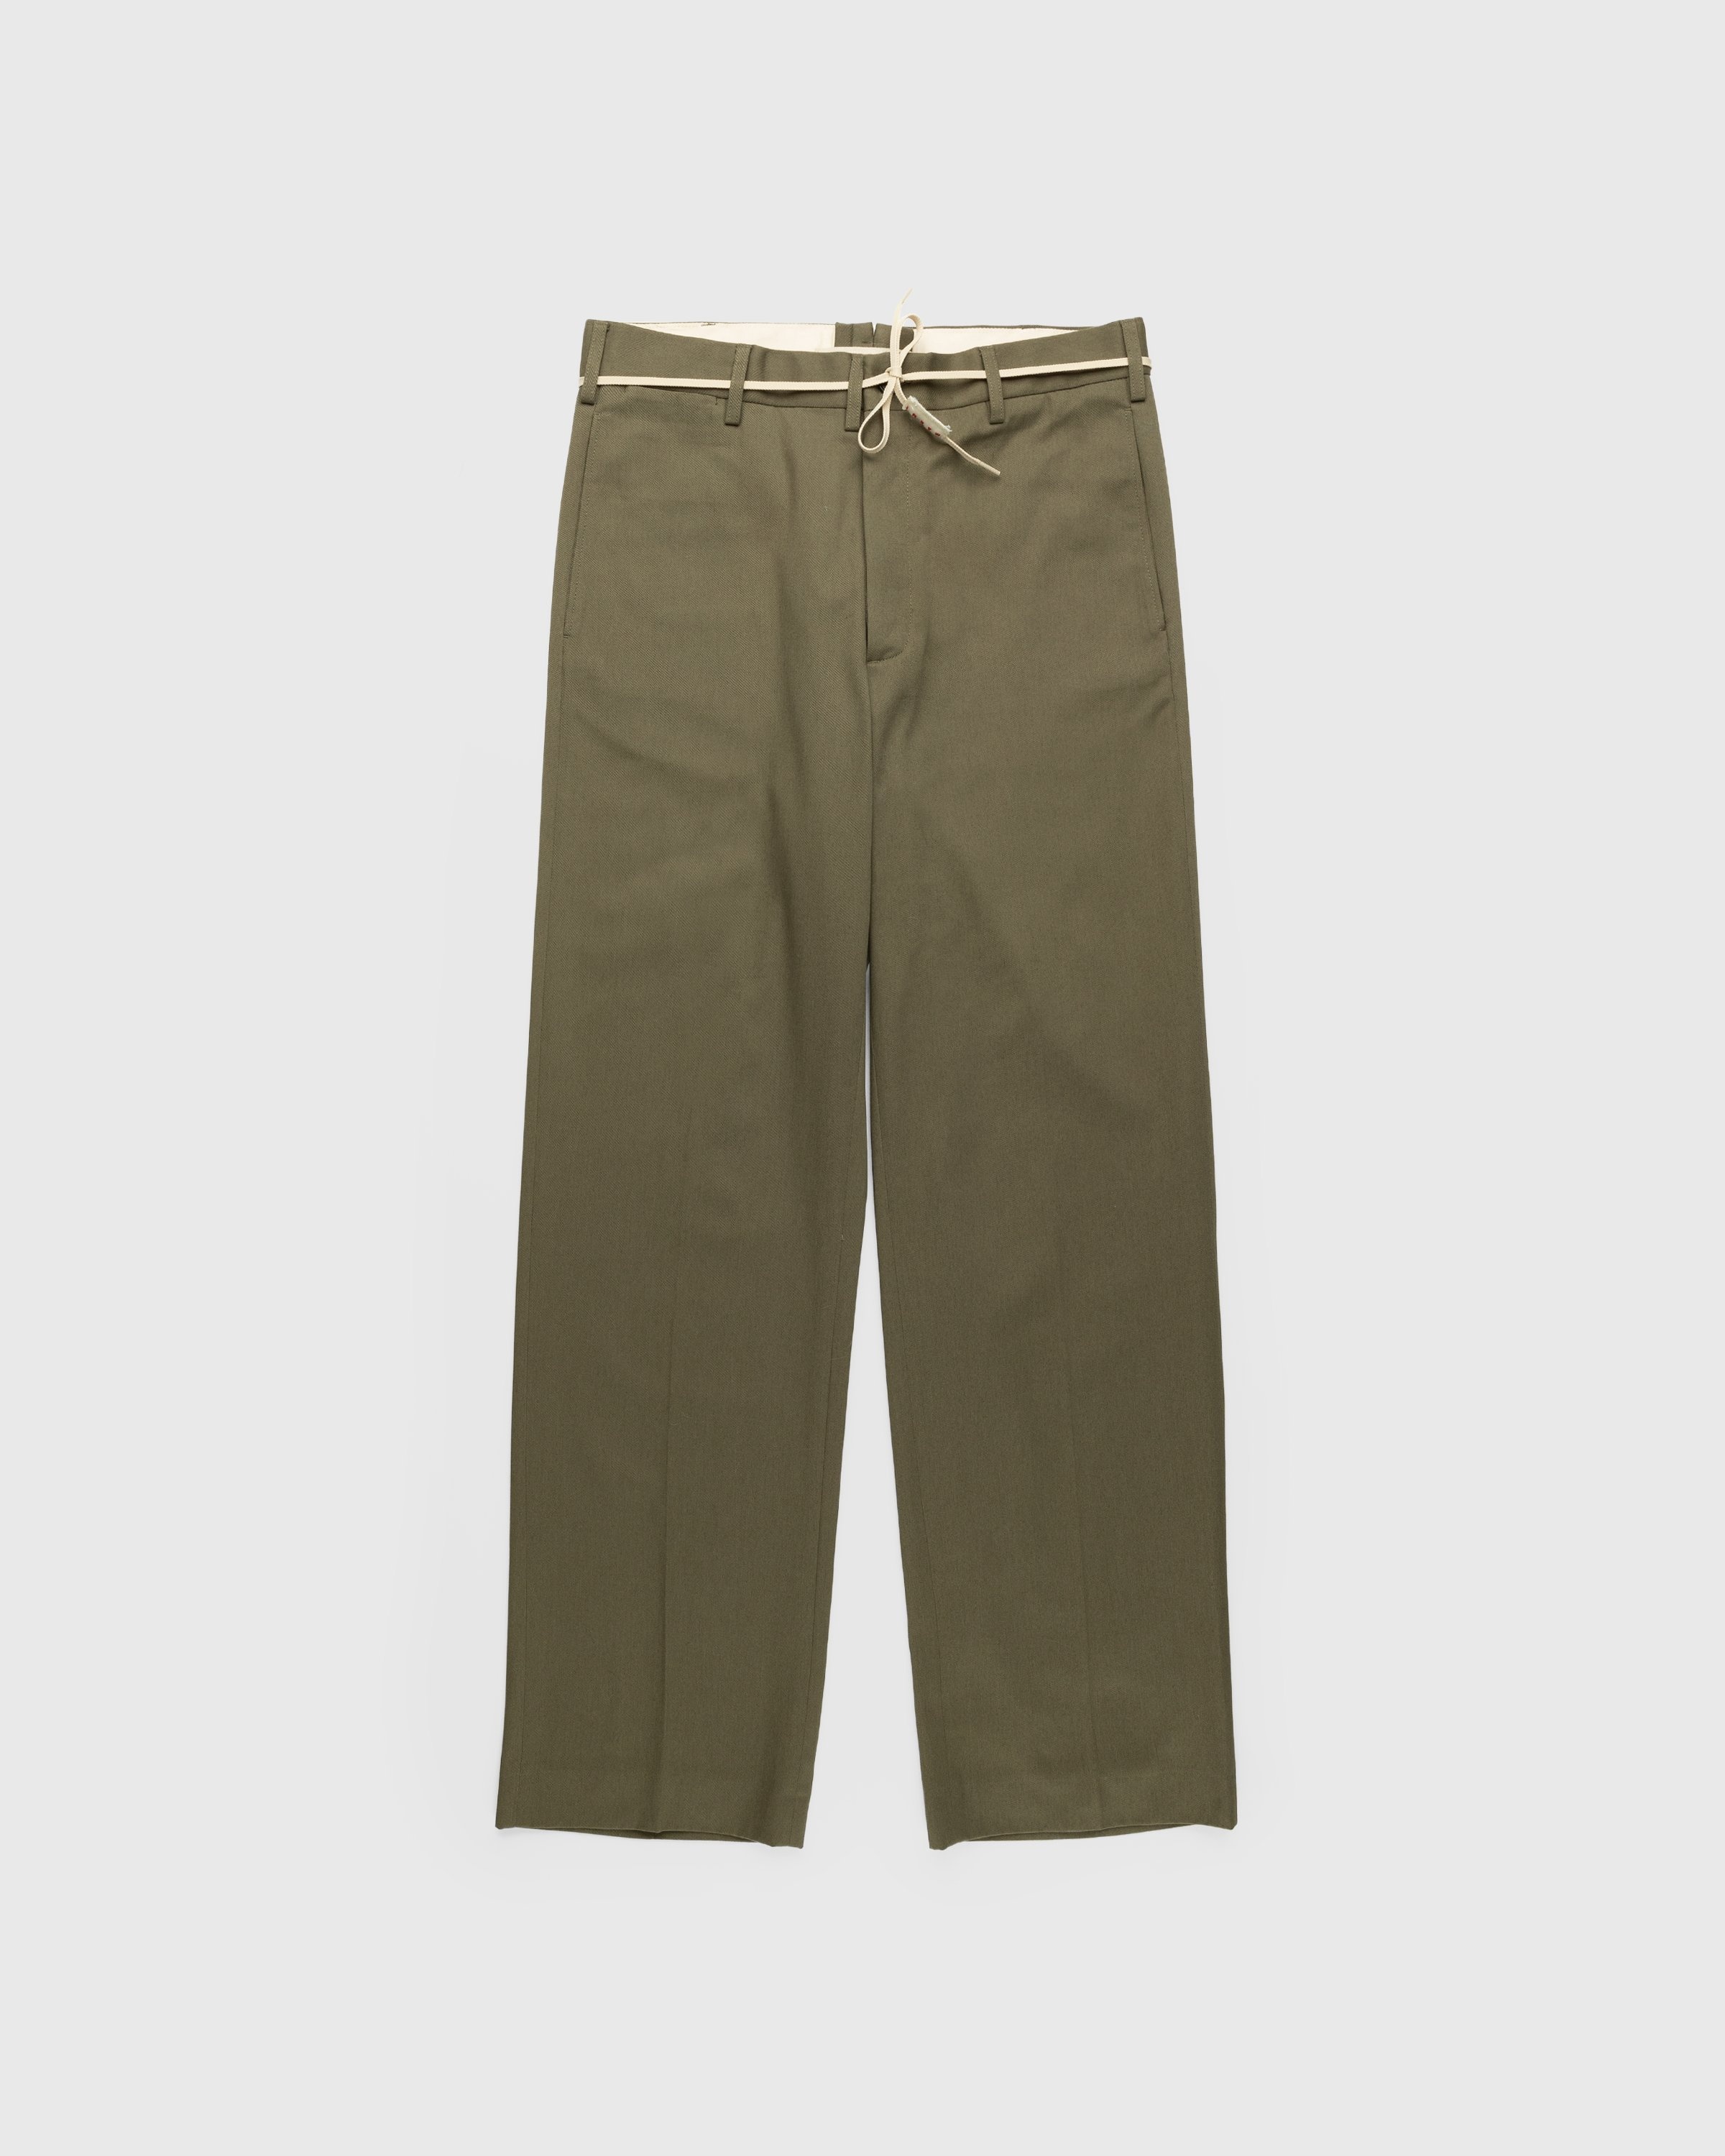 Marni – Gabardine Cotton Cropped Trousers Stone Green - Pants - Green - Image 1